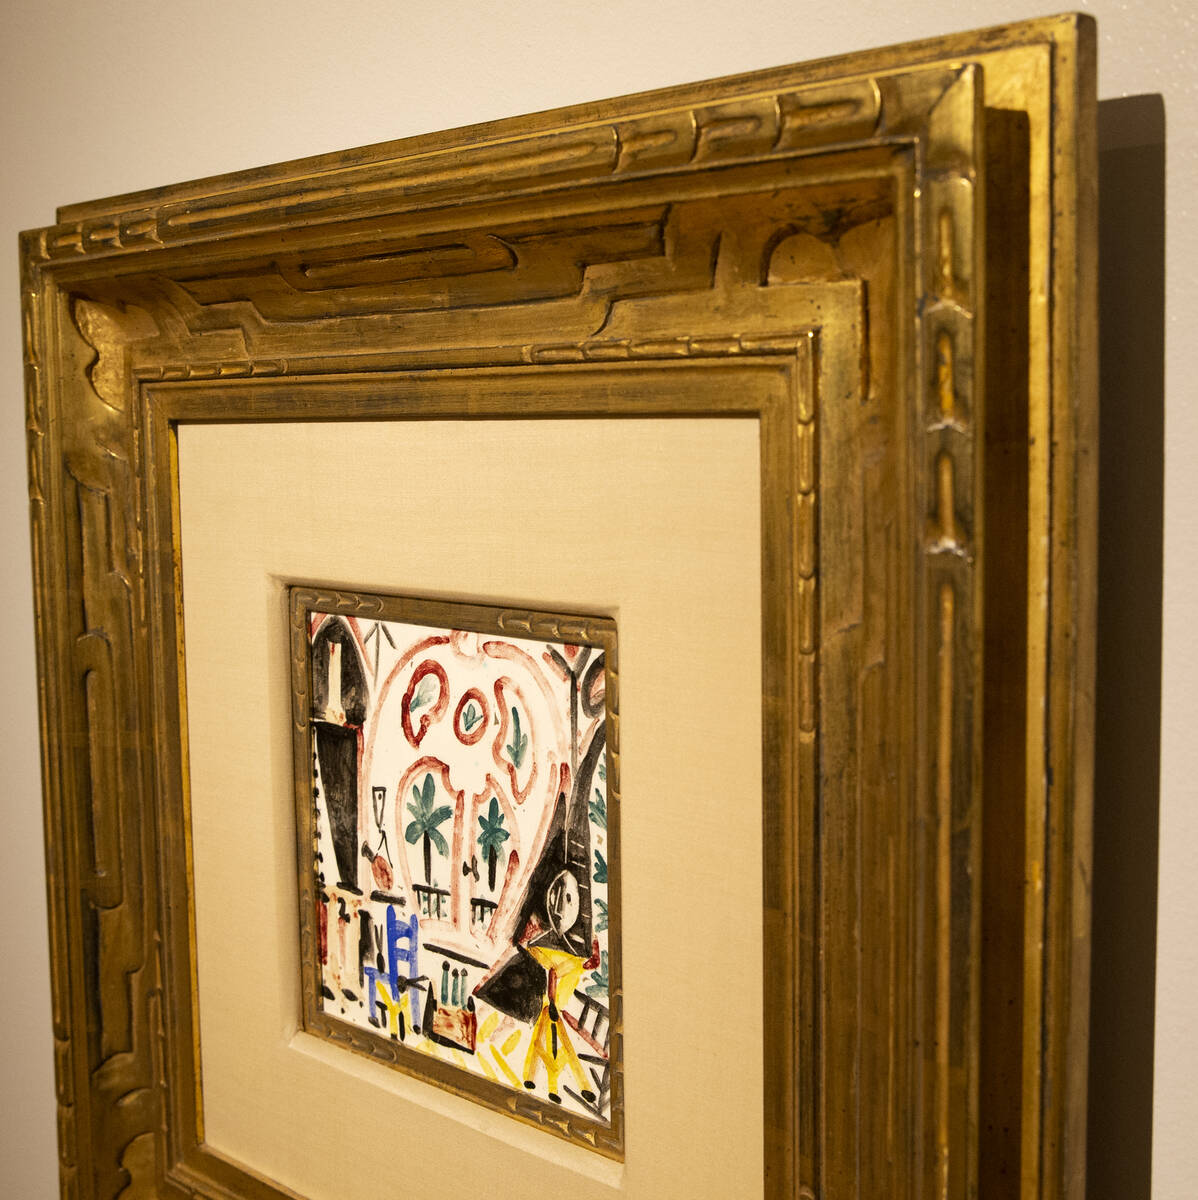 Pablo Picasso's "La fenetre de l'atelier la Californie" is on display at the Bellagio ...